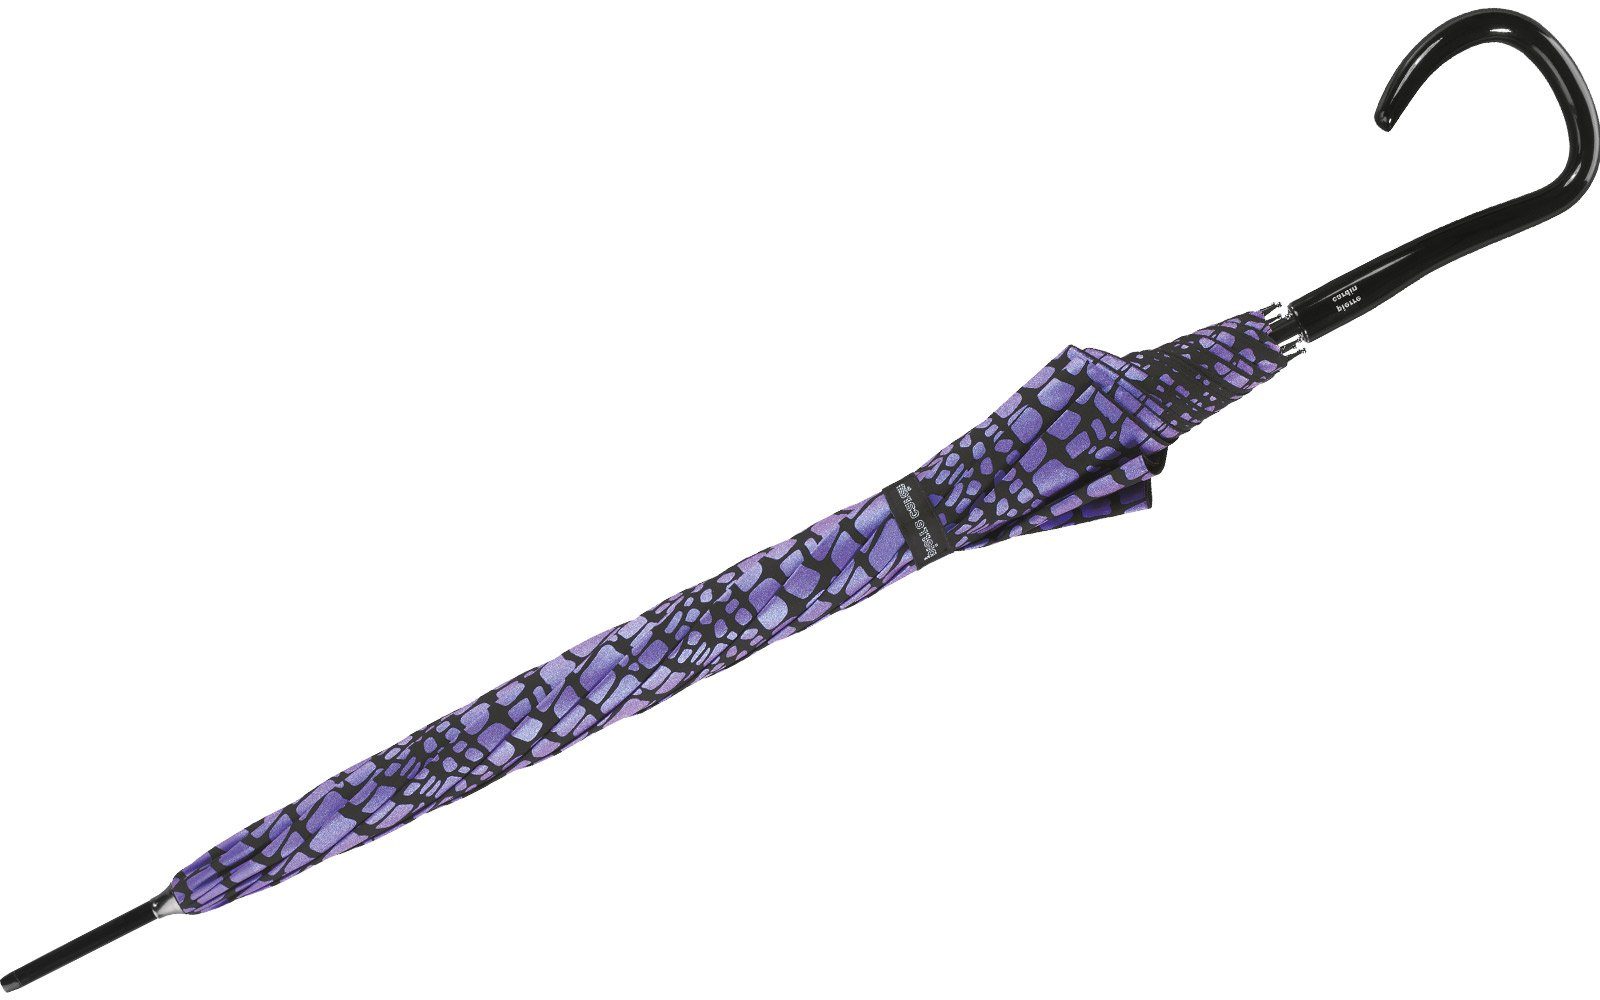 Pierre Cardin den Auf-Automatik, Damen-Regenschirm Regenschirm Krokodil-Optik lila-schwarz mit großer für Langregenschirm